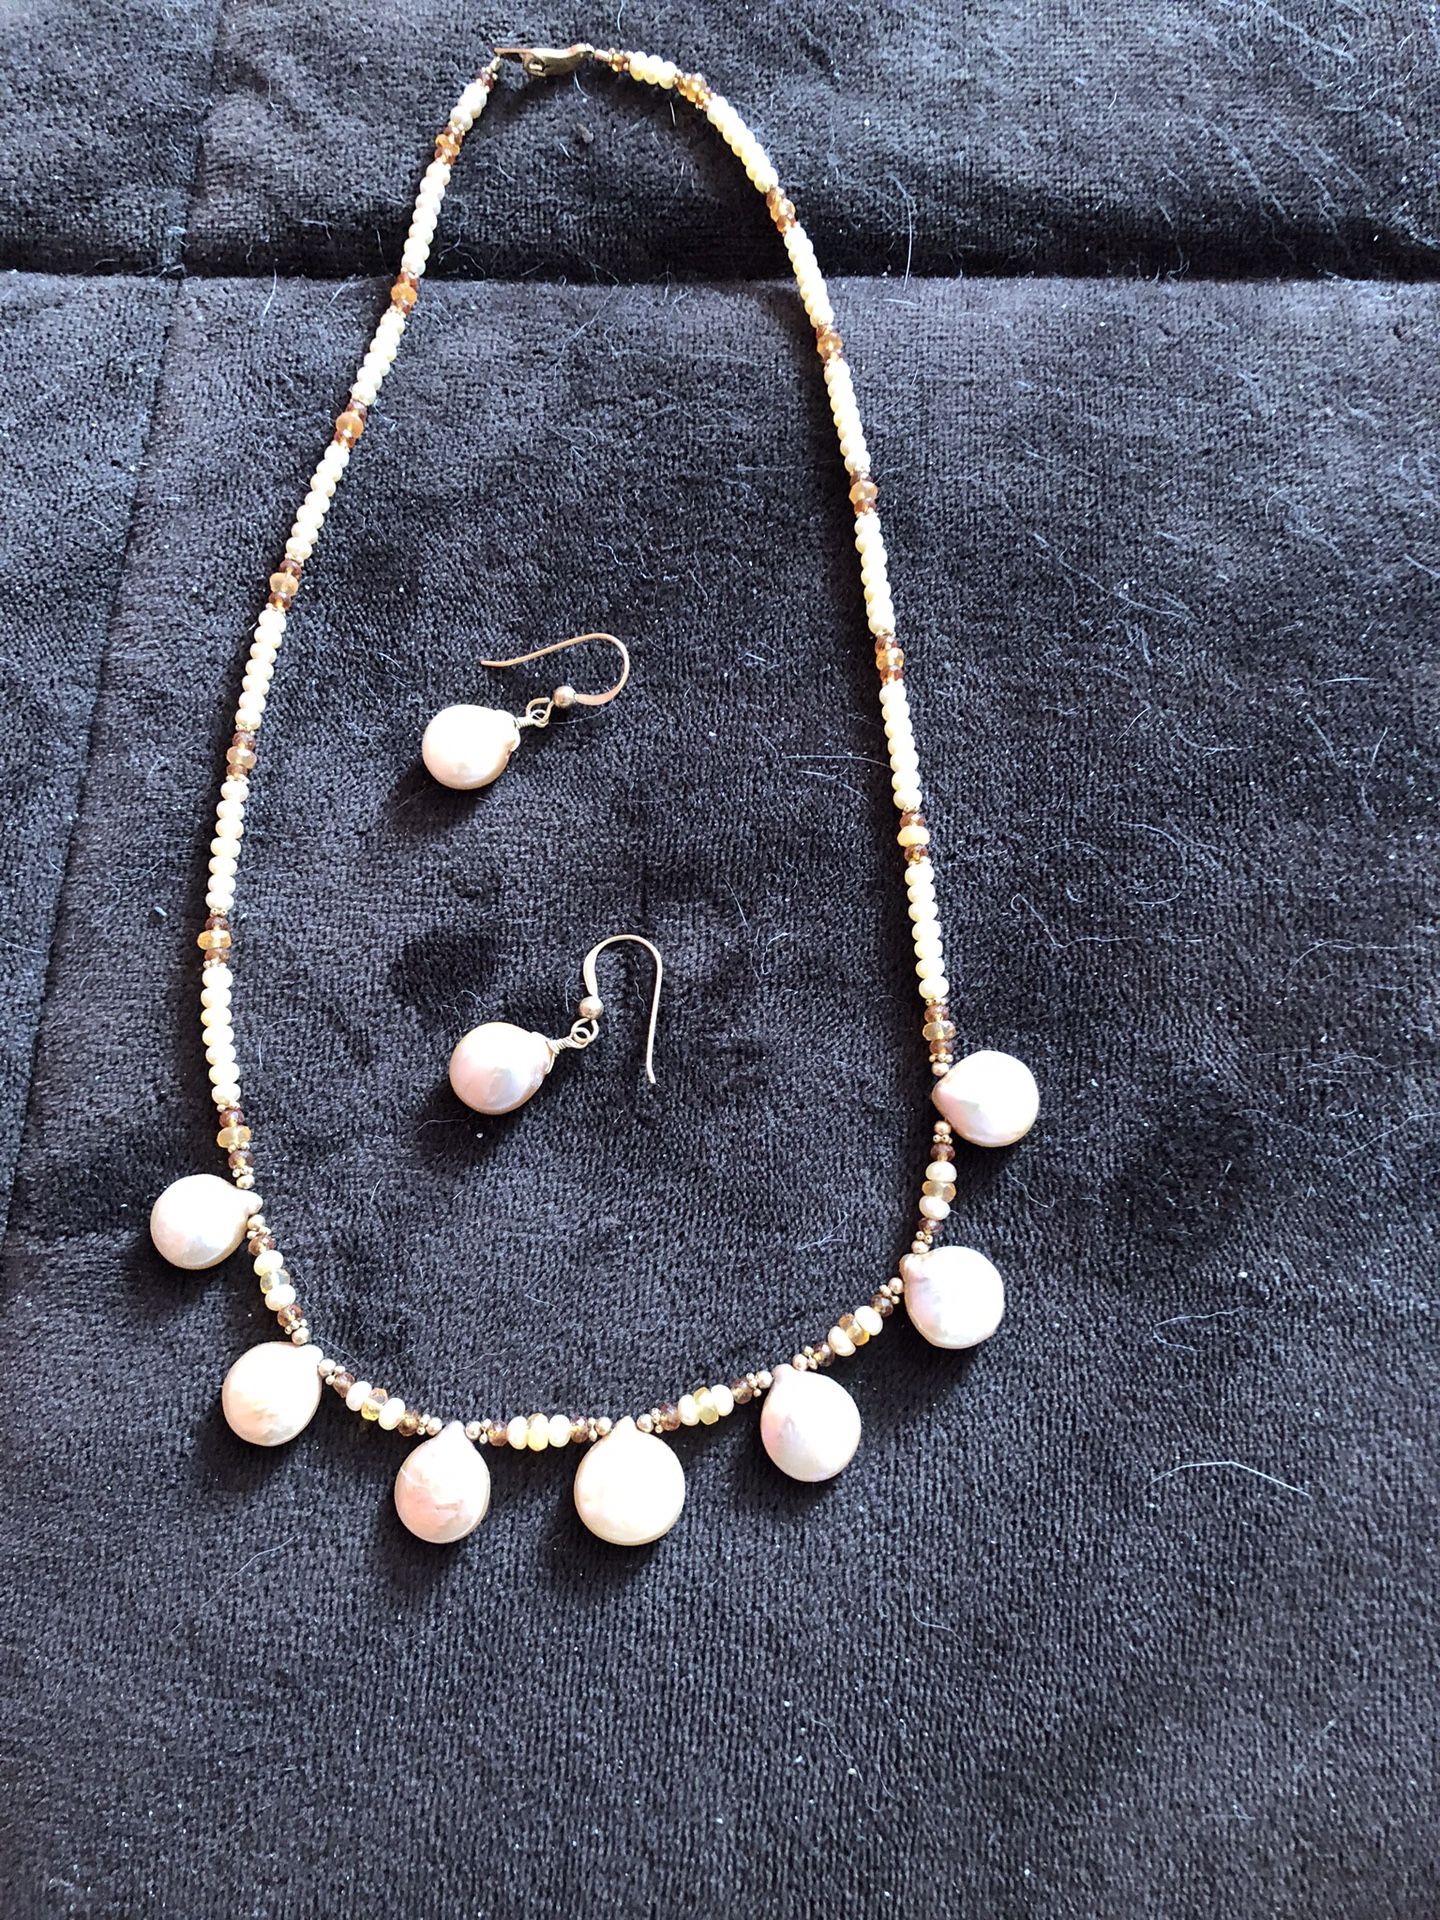 Handmade Keshi Pearl Necklace and earrings.